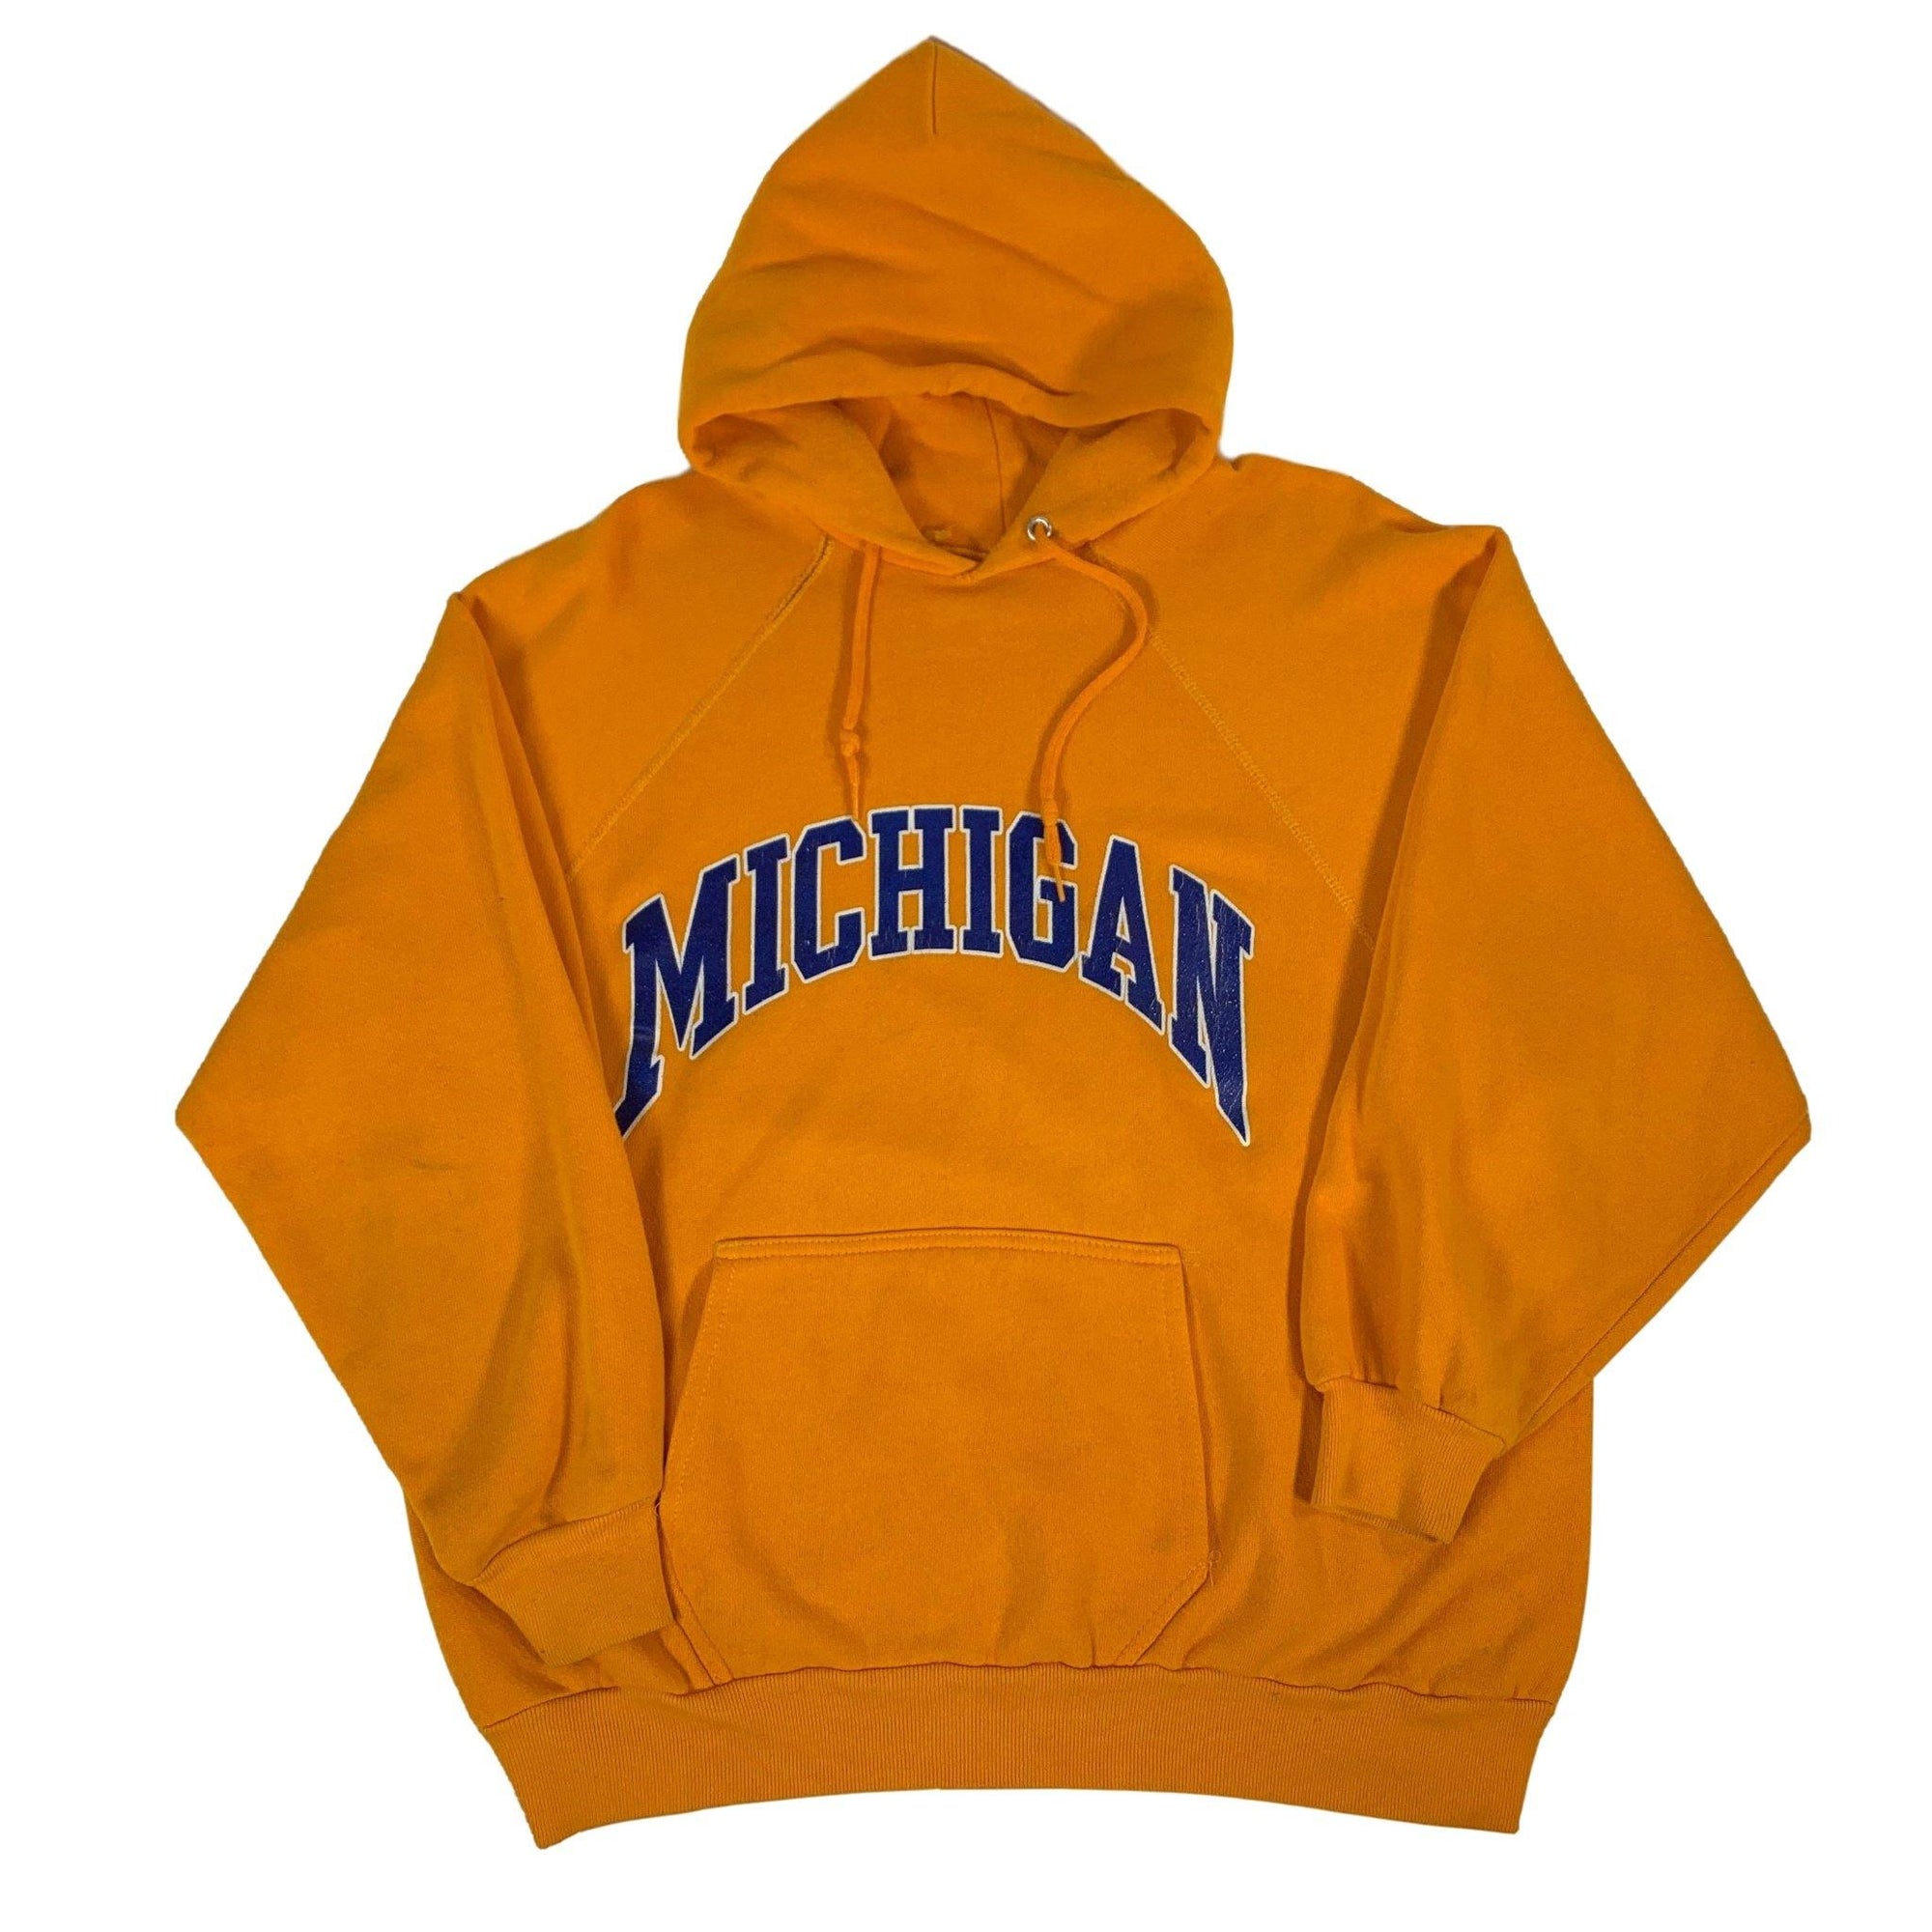 Vintage Michigan "Wolverines" Pullover Sweatshirt - jointcustodydc